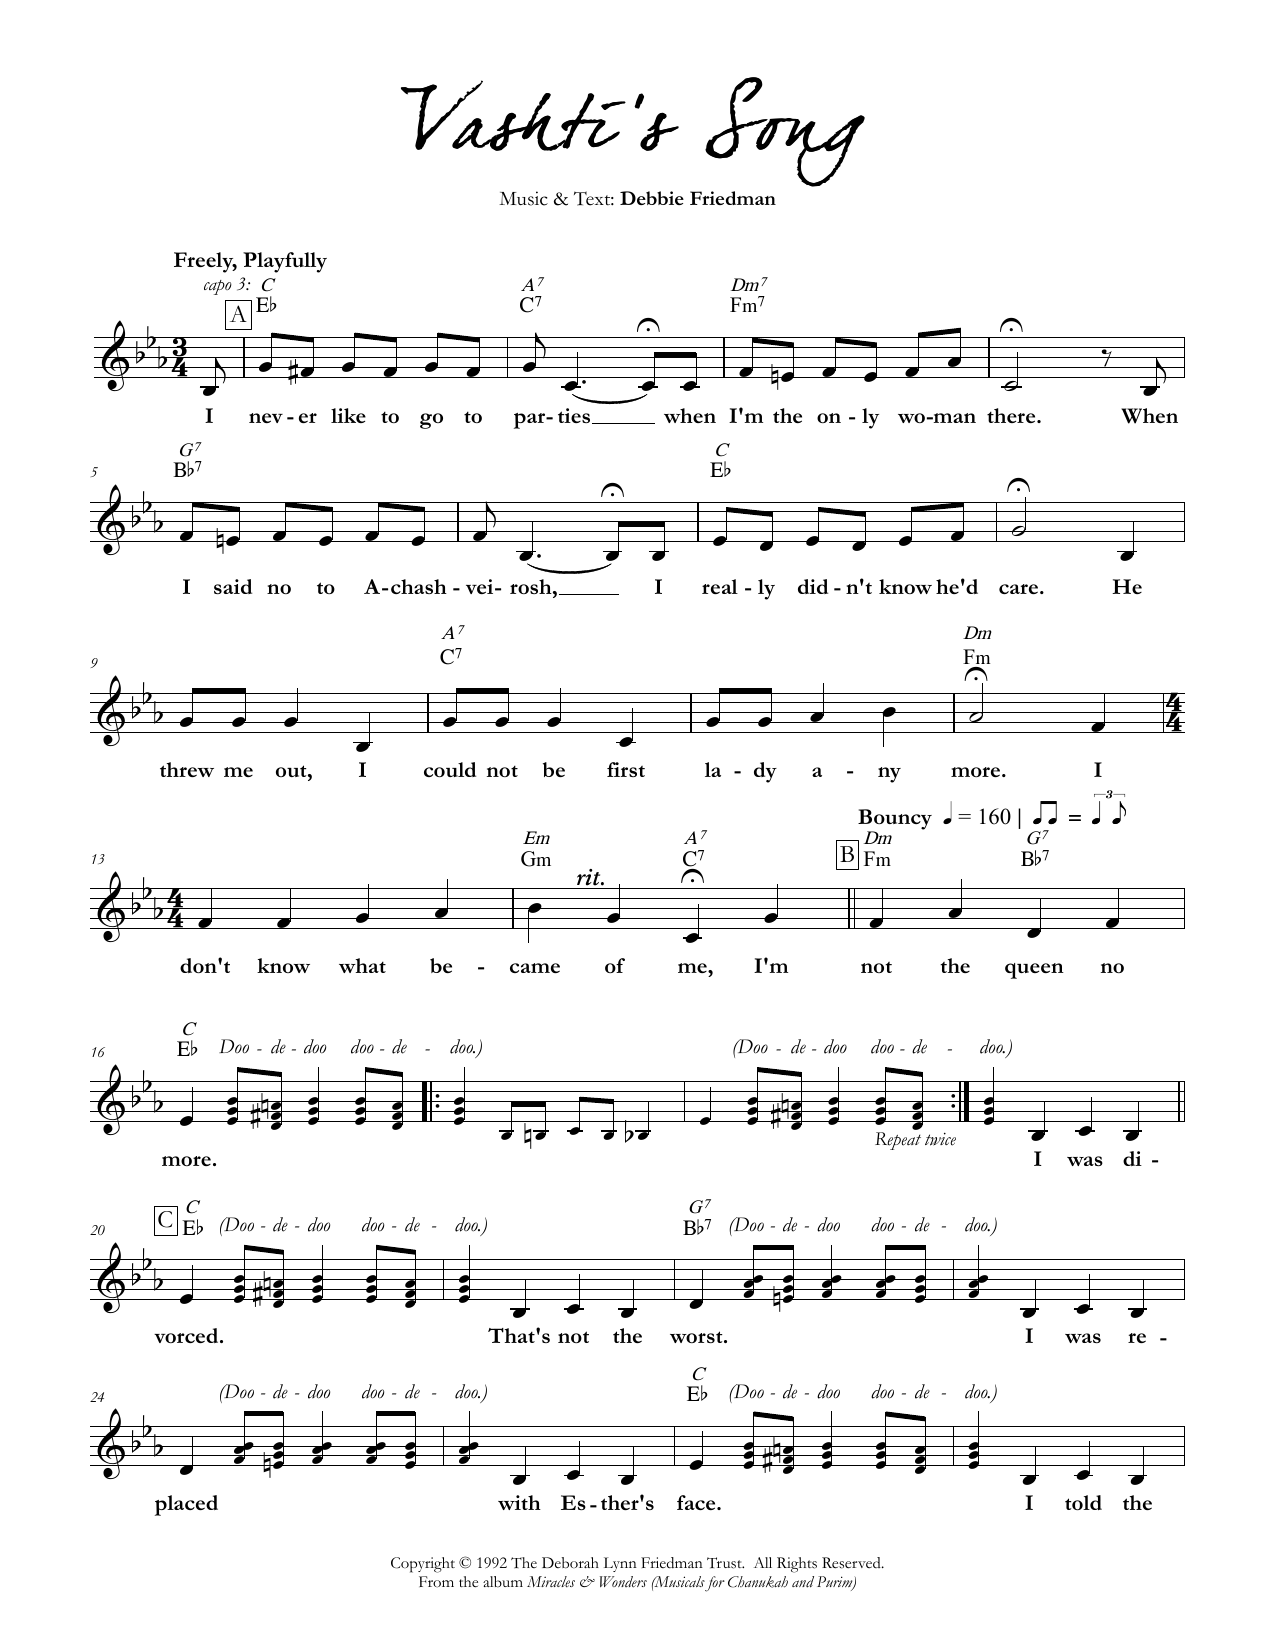 Debbie Friedman Vashti's Song Sheet Music Notes & Chords for Lead Sheet / Fake Book - Download or Print PDF